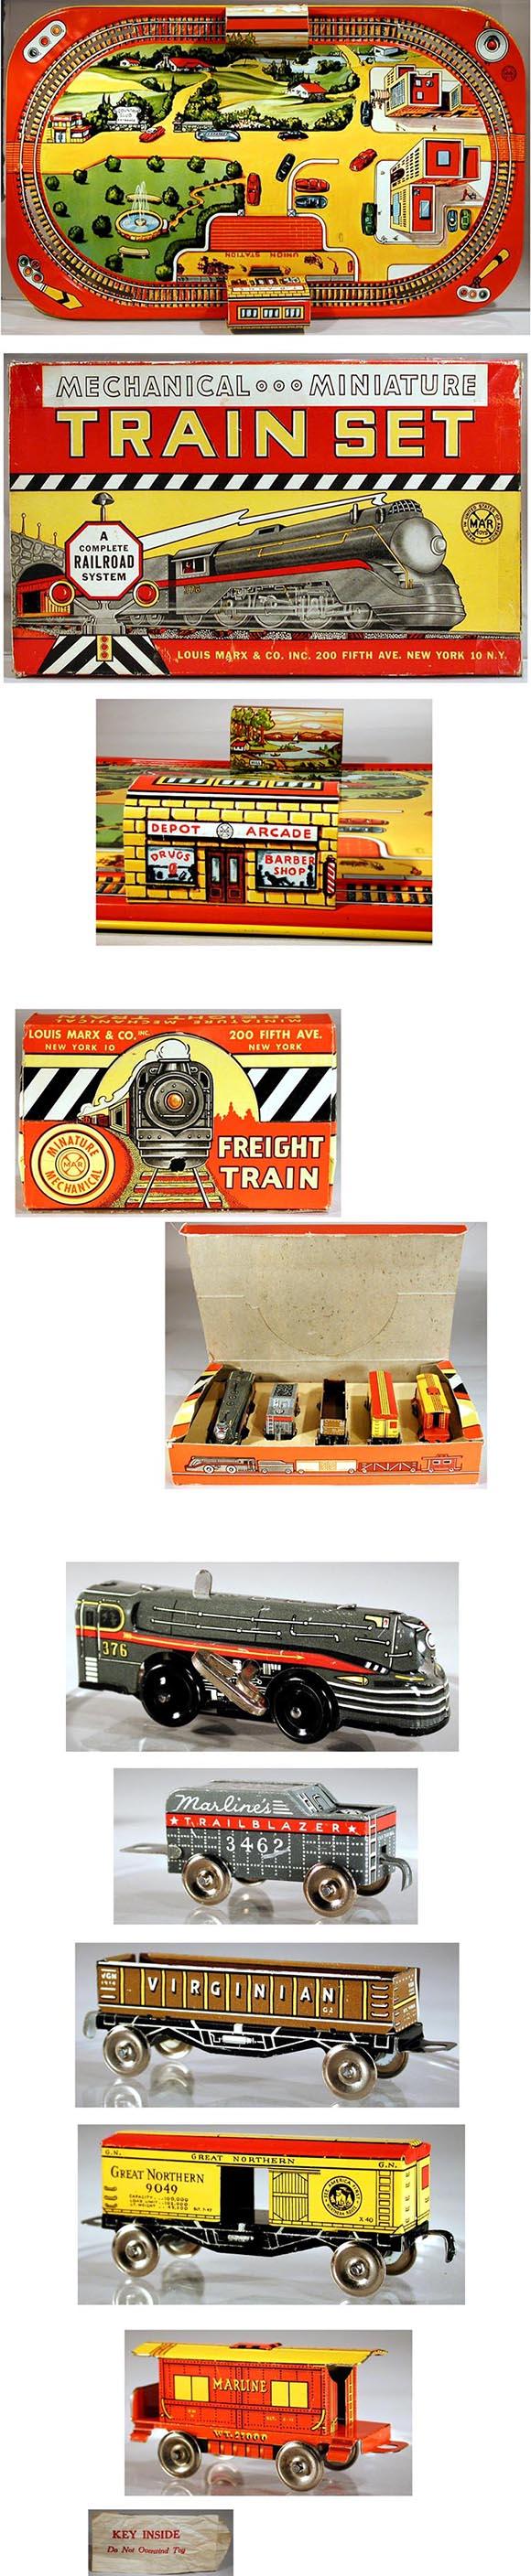 1947 Marx, Mechanical Miniature Freight Train Set in Original Box